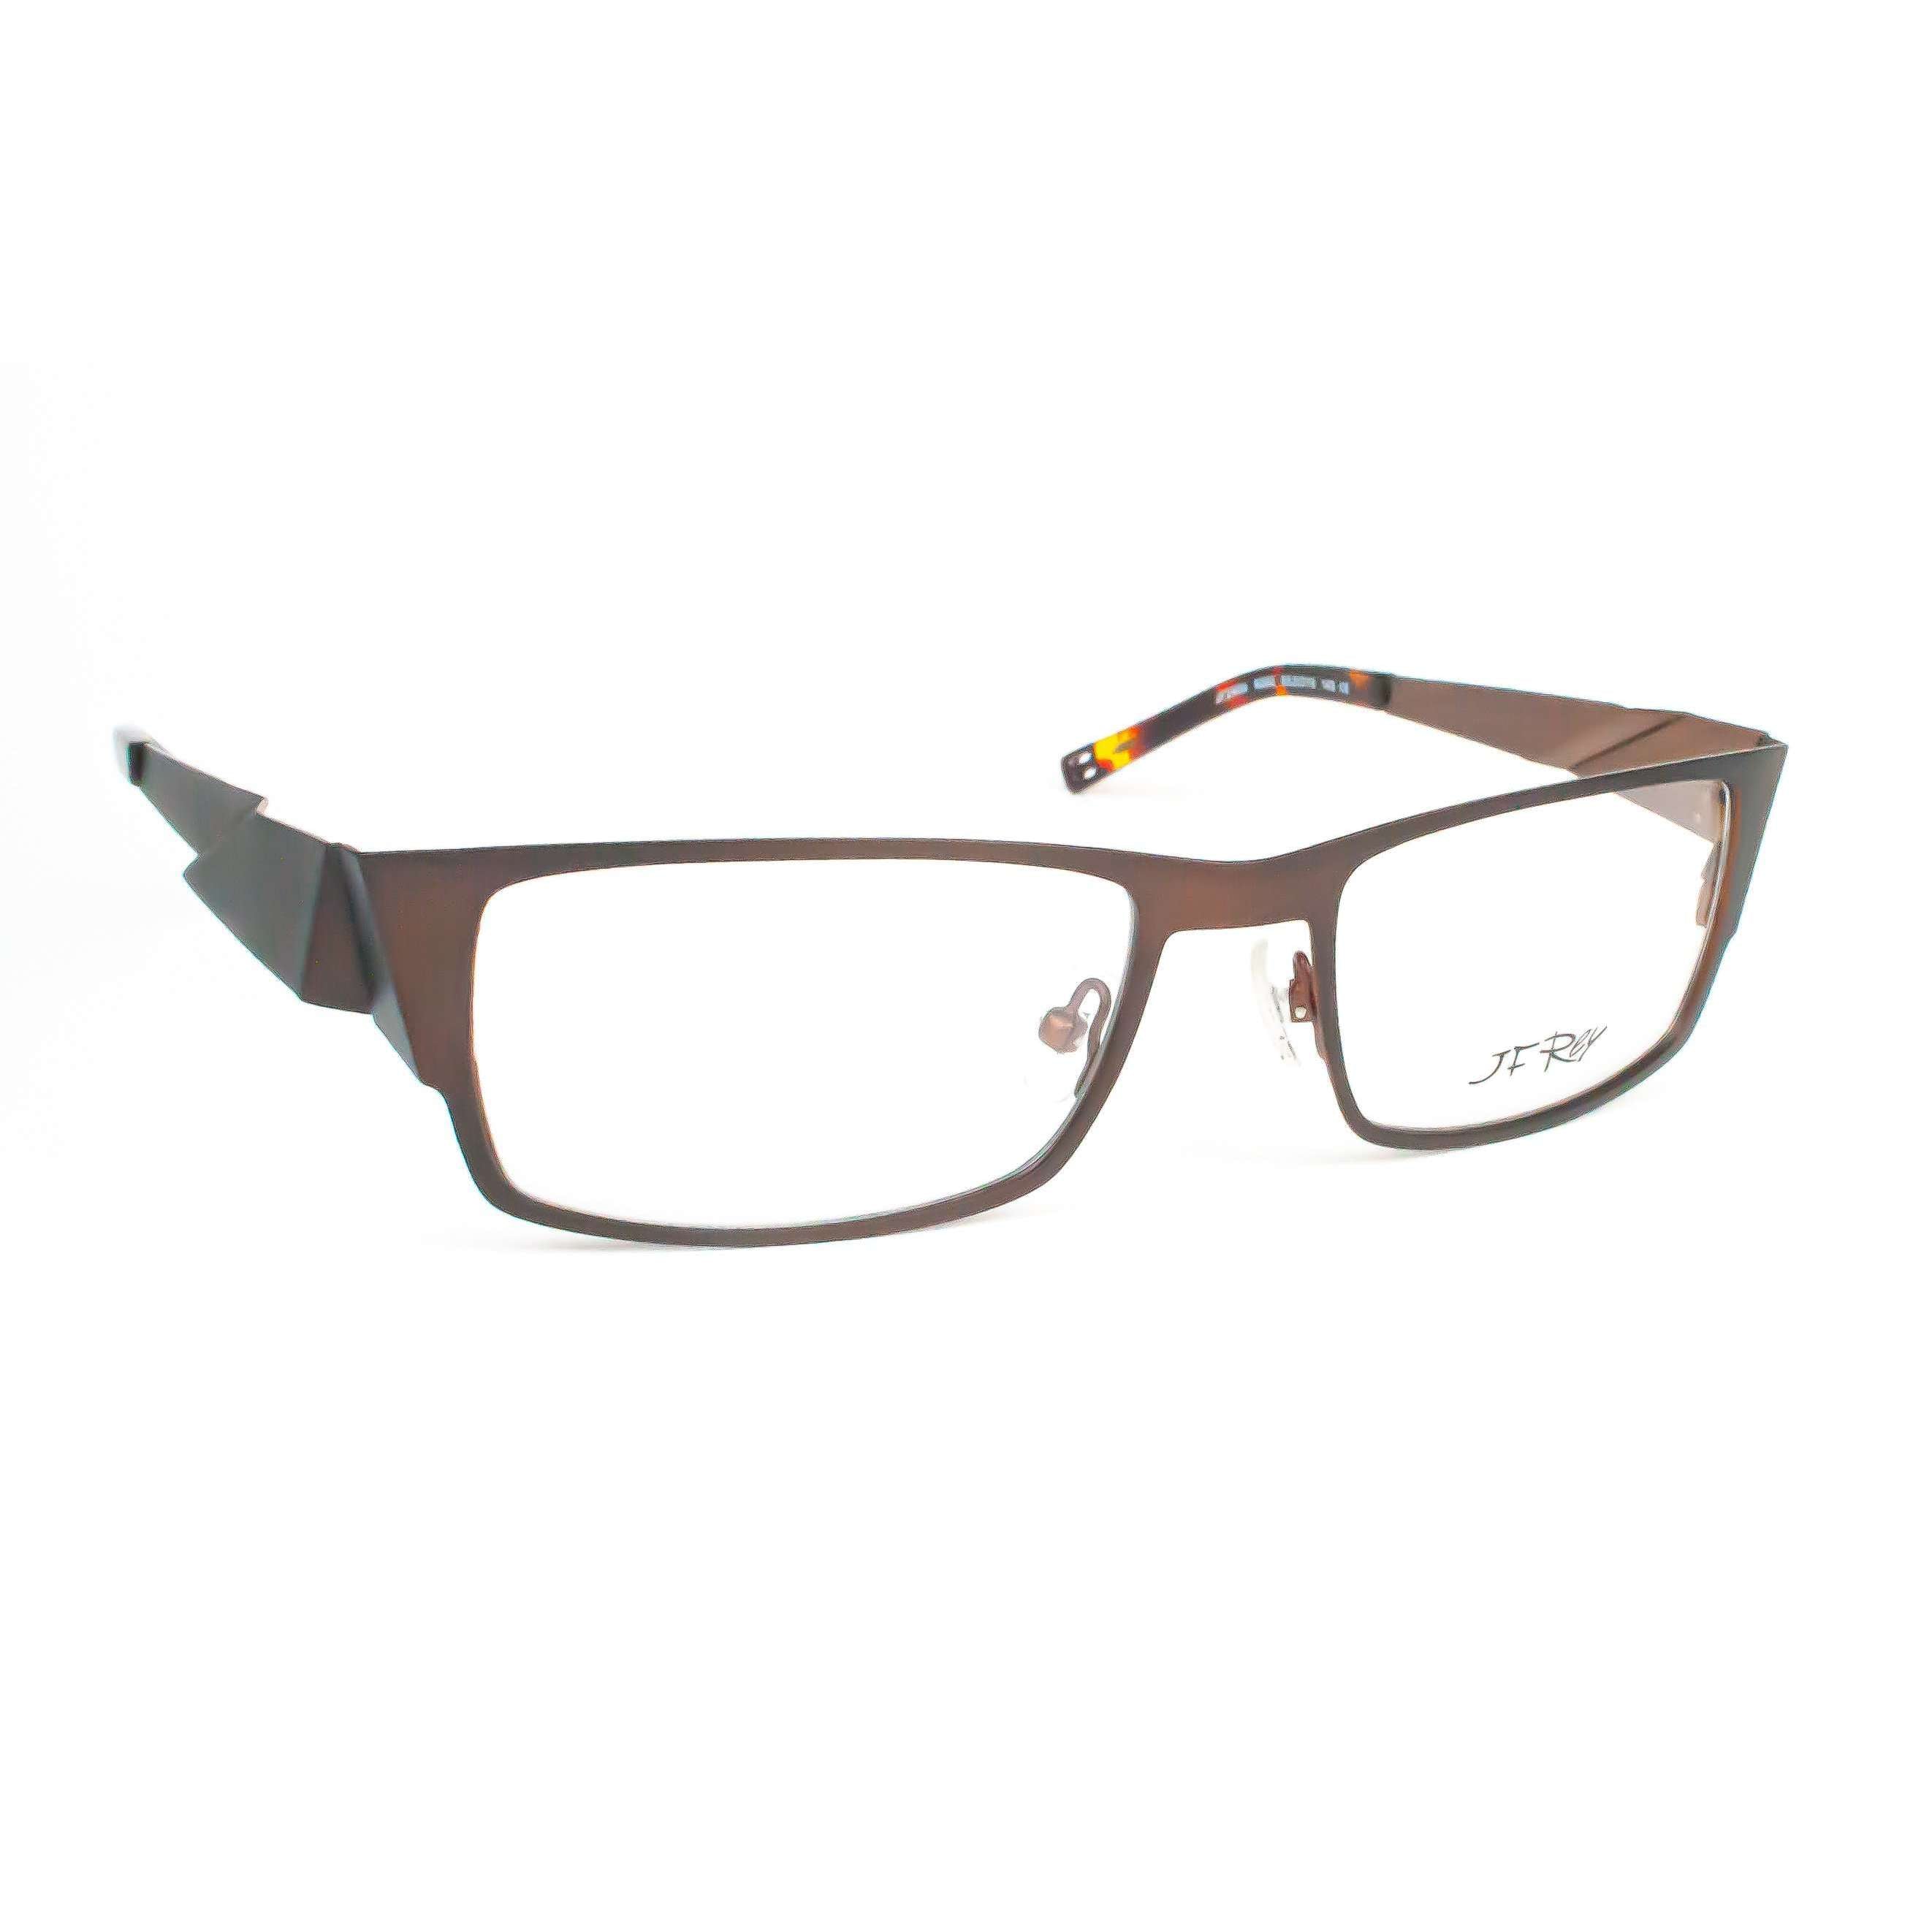 JF Rey Model 2409 Brown Metal Glasses